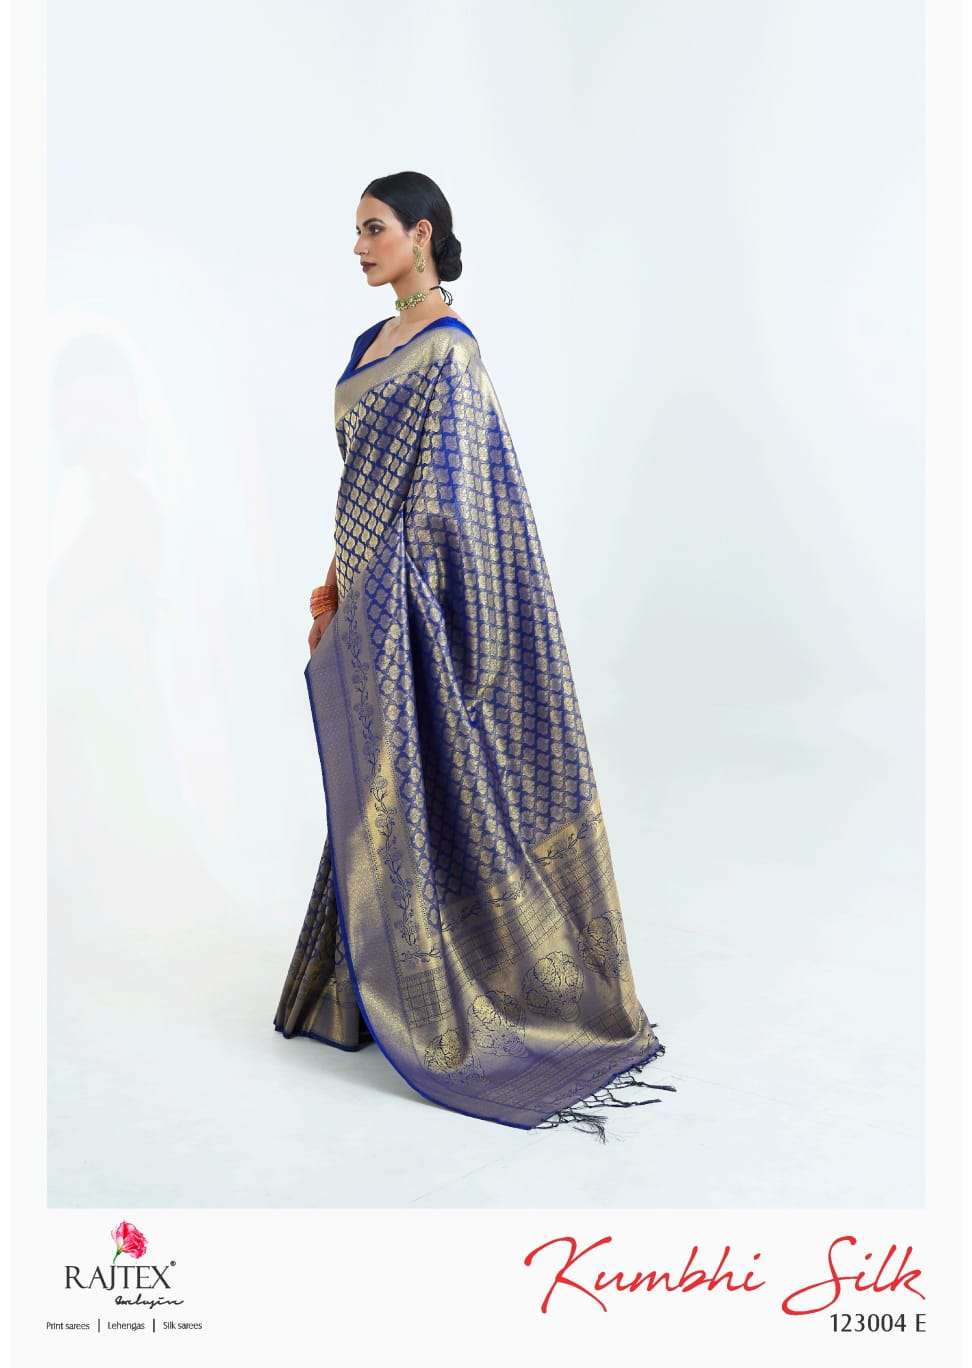 Rajtex Kumbhi Silk 123004 Handloom Weaving Silk Saree Collection Wholesale Rtae in Surat - Saidharanx